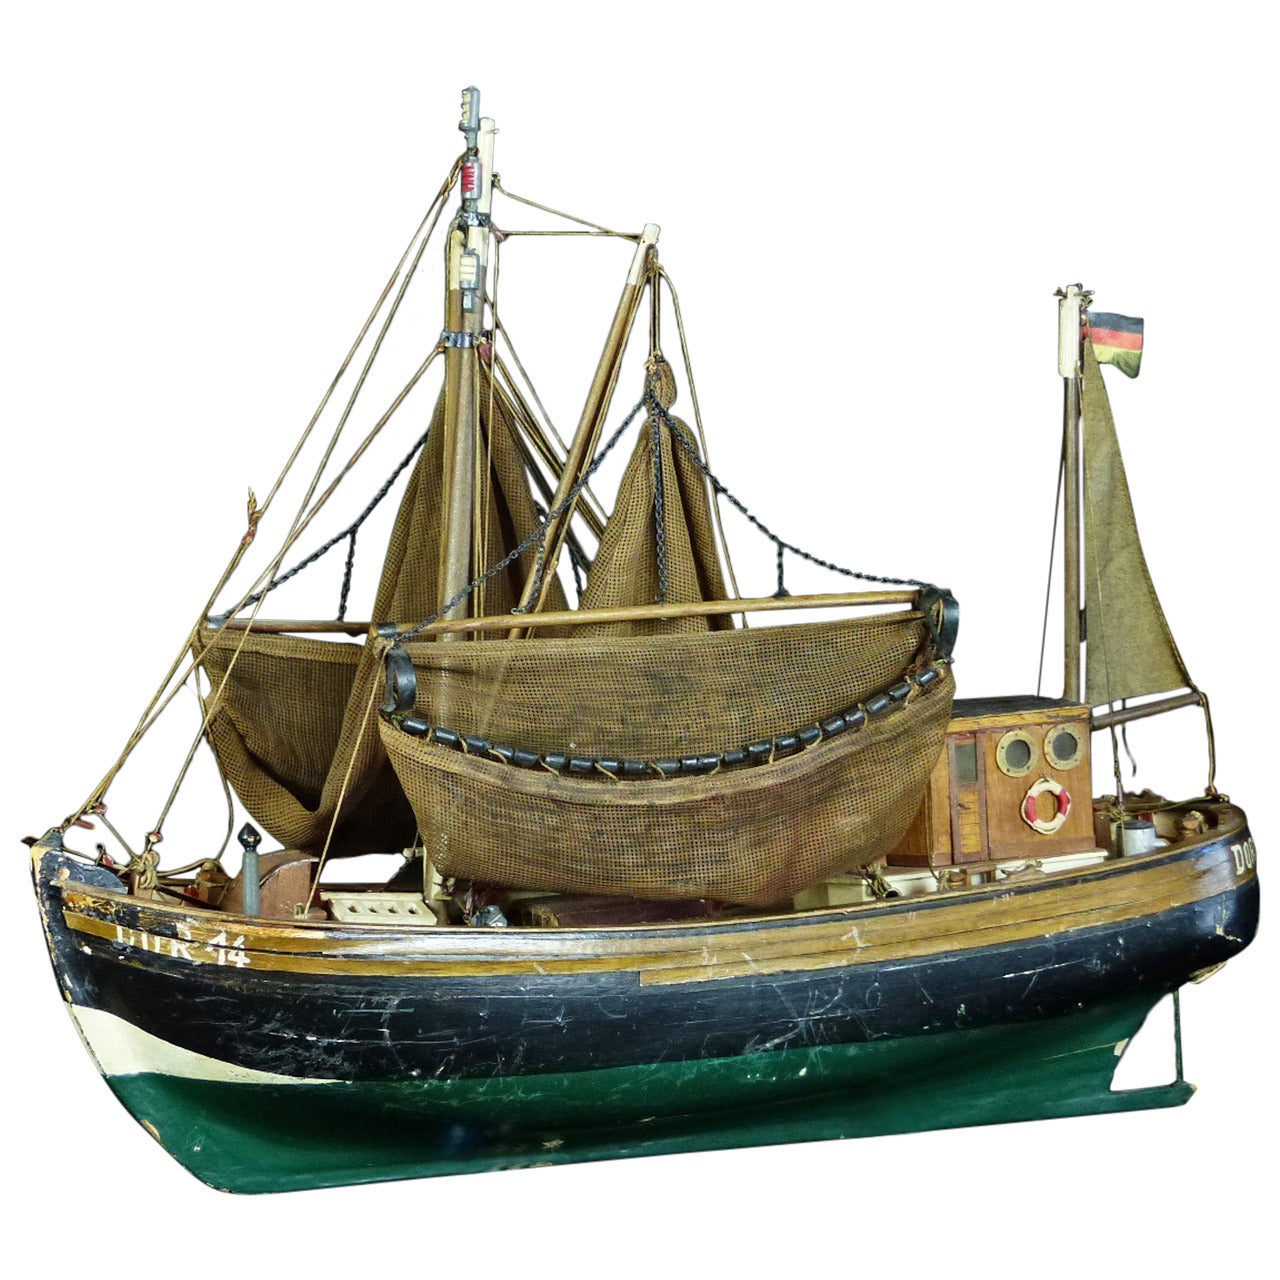 Model of the North Sea Trawler Ship